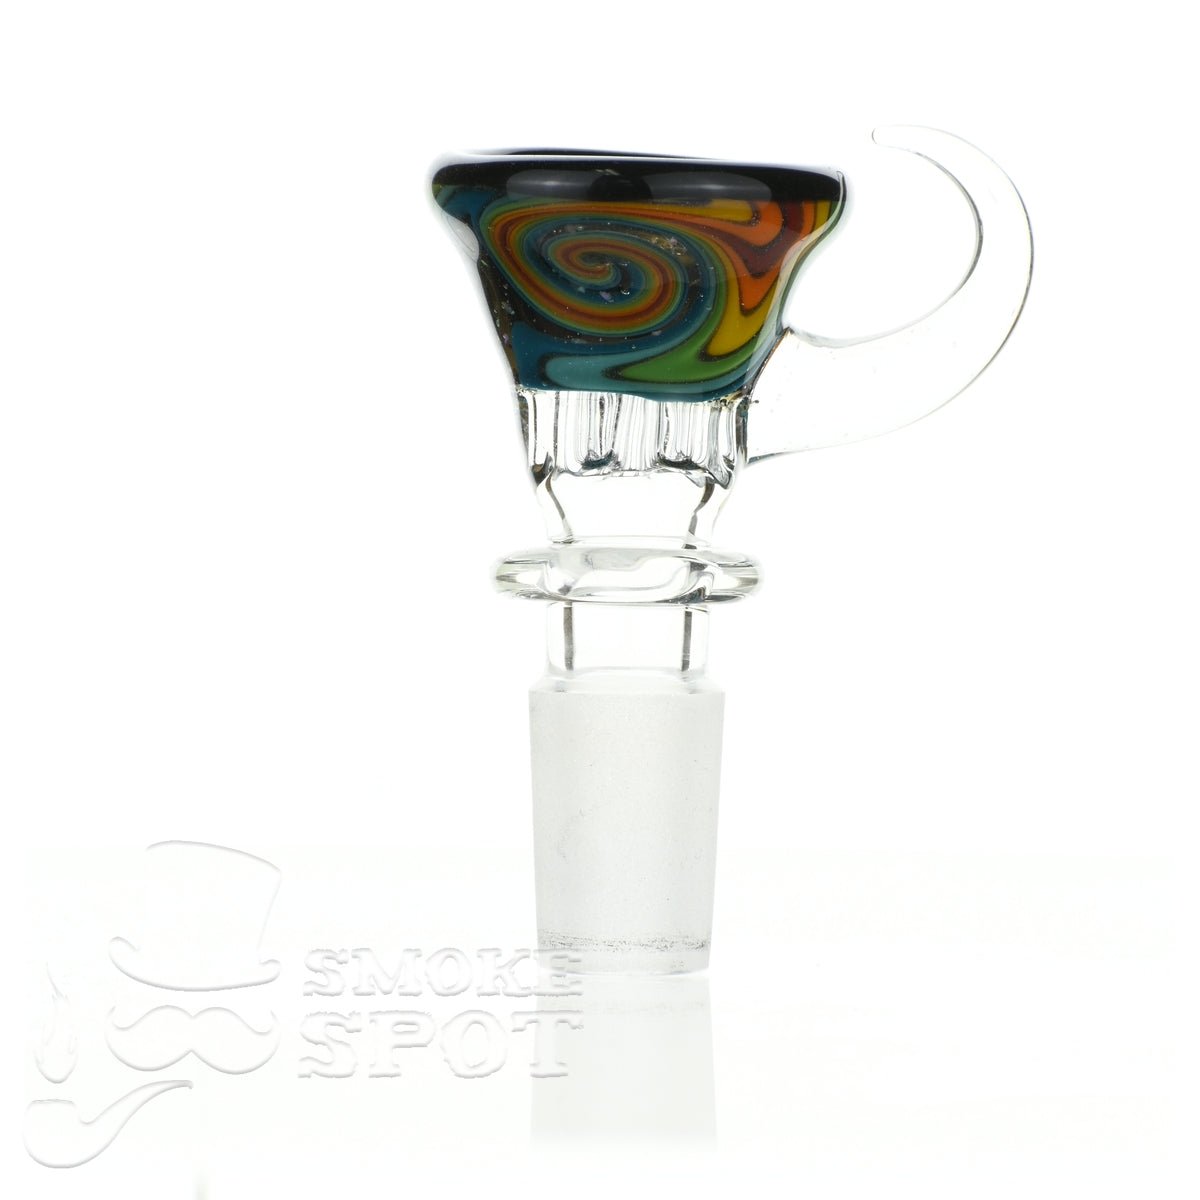 Glass enthuastic bowl 14 mm with a hook #122 - Smoke Spot Smoke Shop